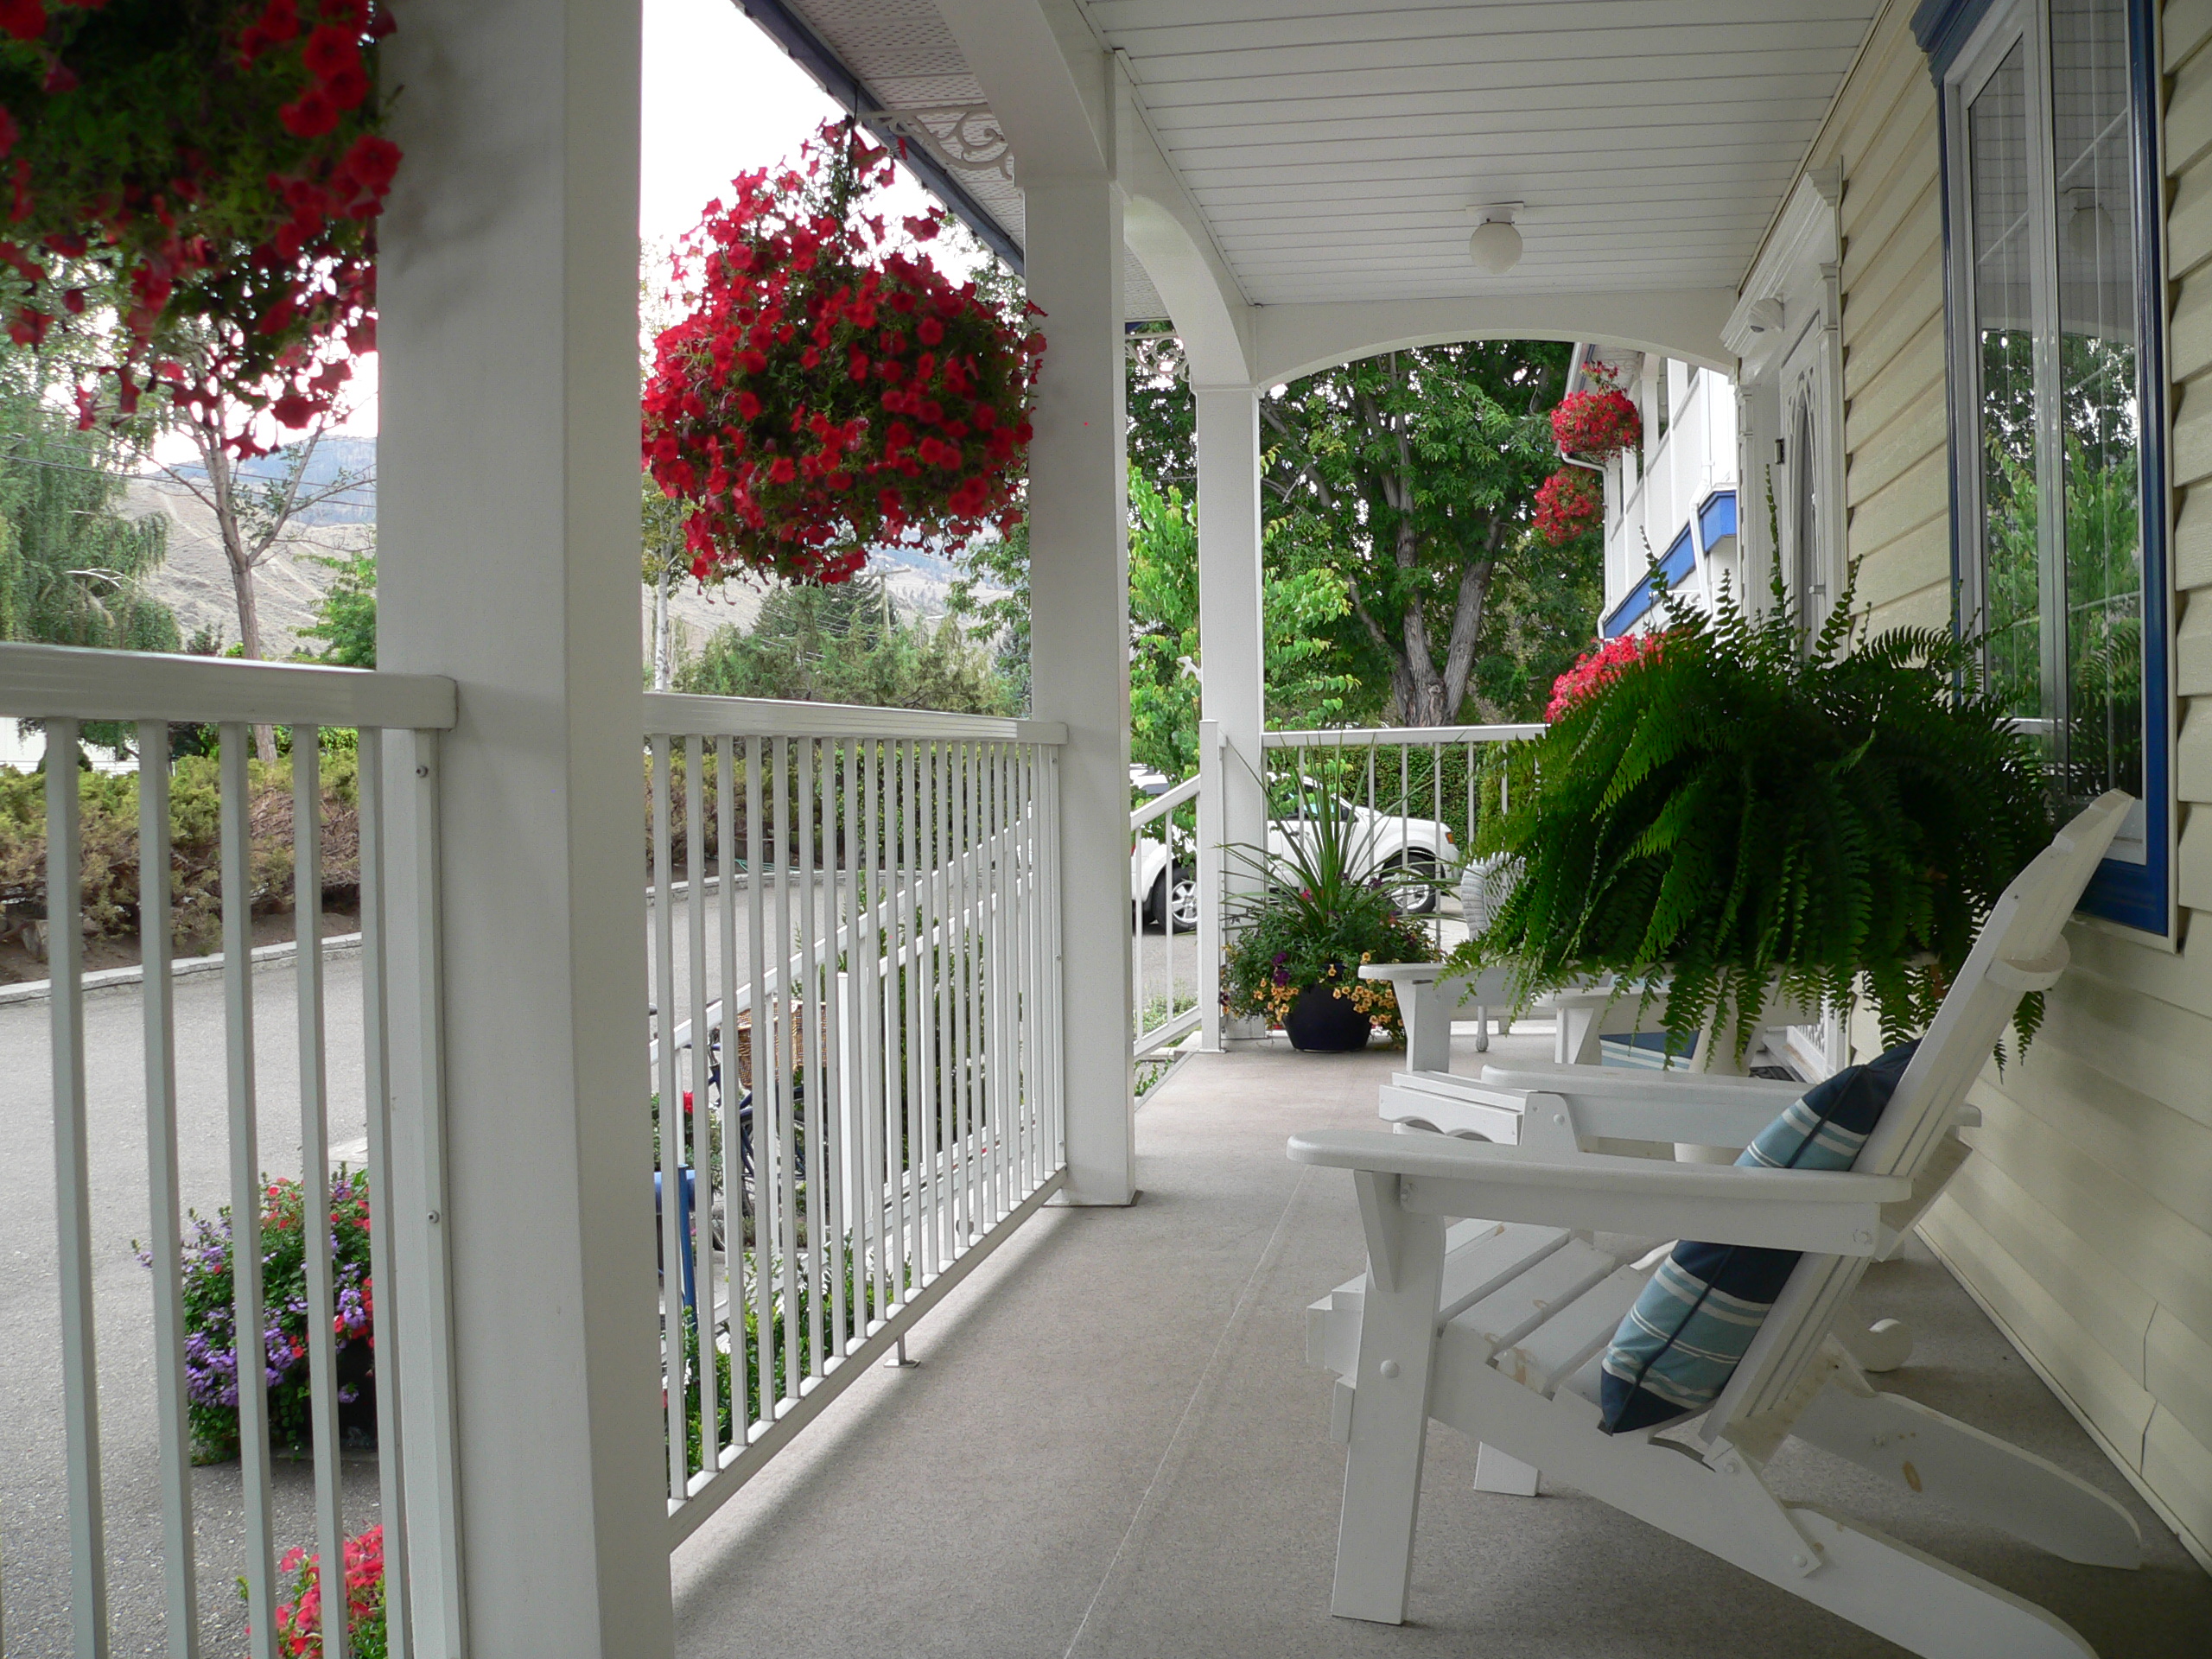 Relax in the Adirondack chairs on the veranda when you choose the Veranda Room